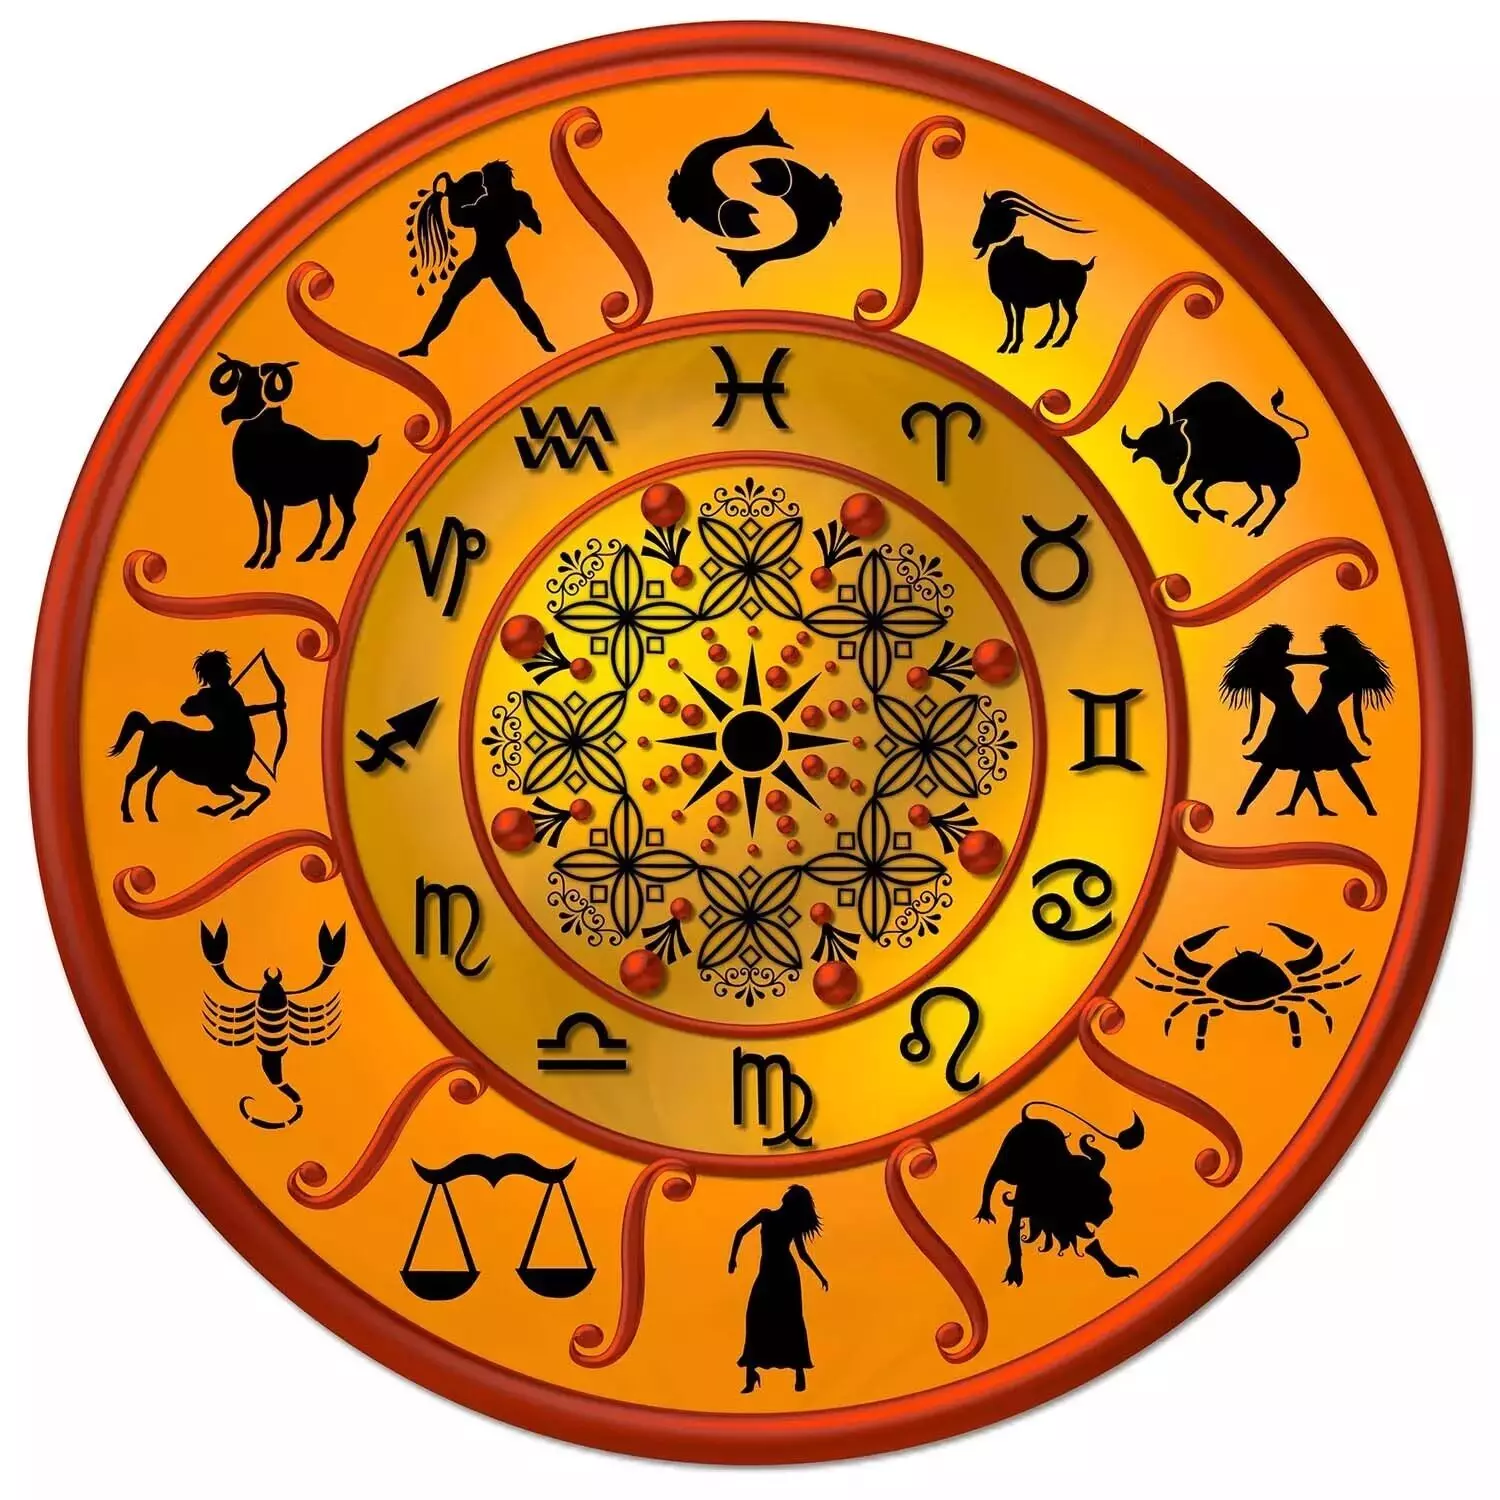 13 Novembar  – Know your todays horoscope